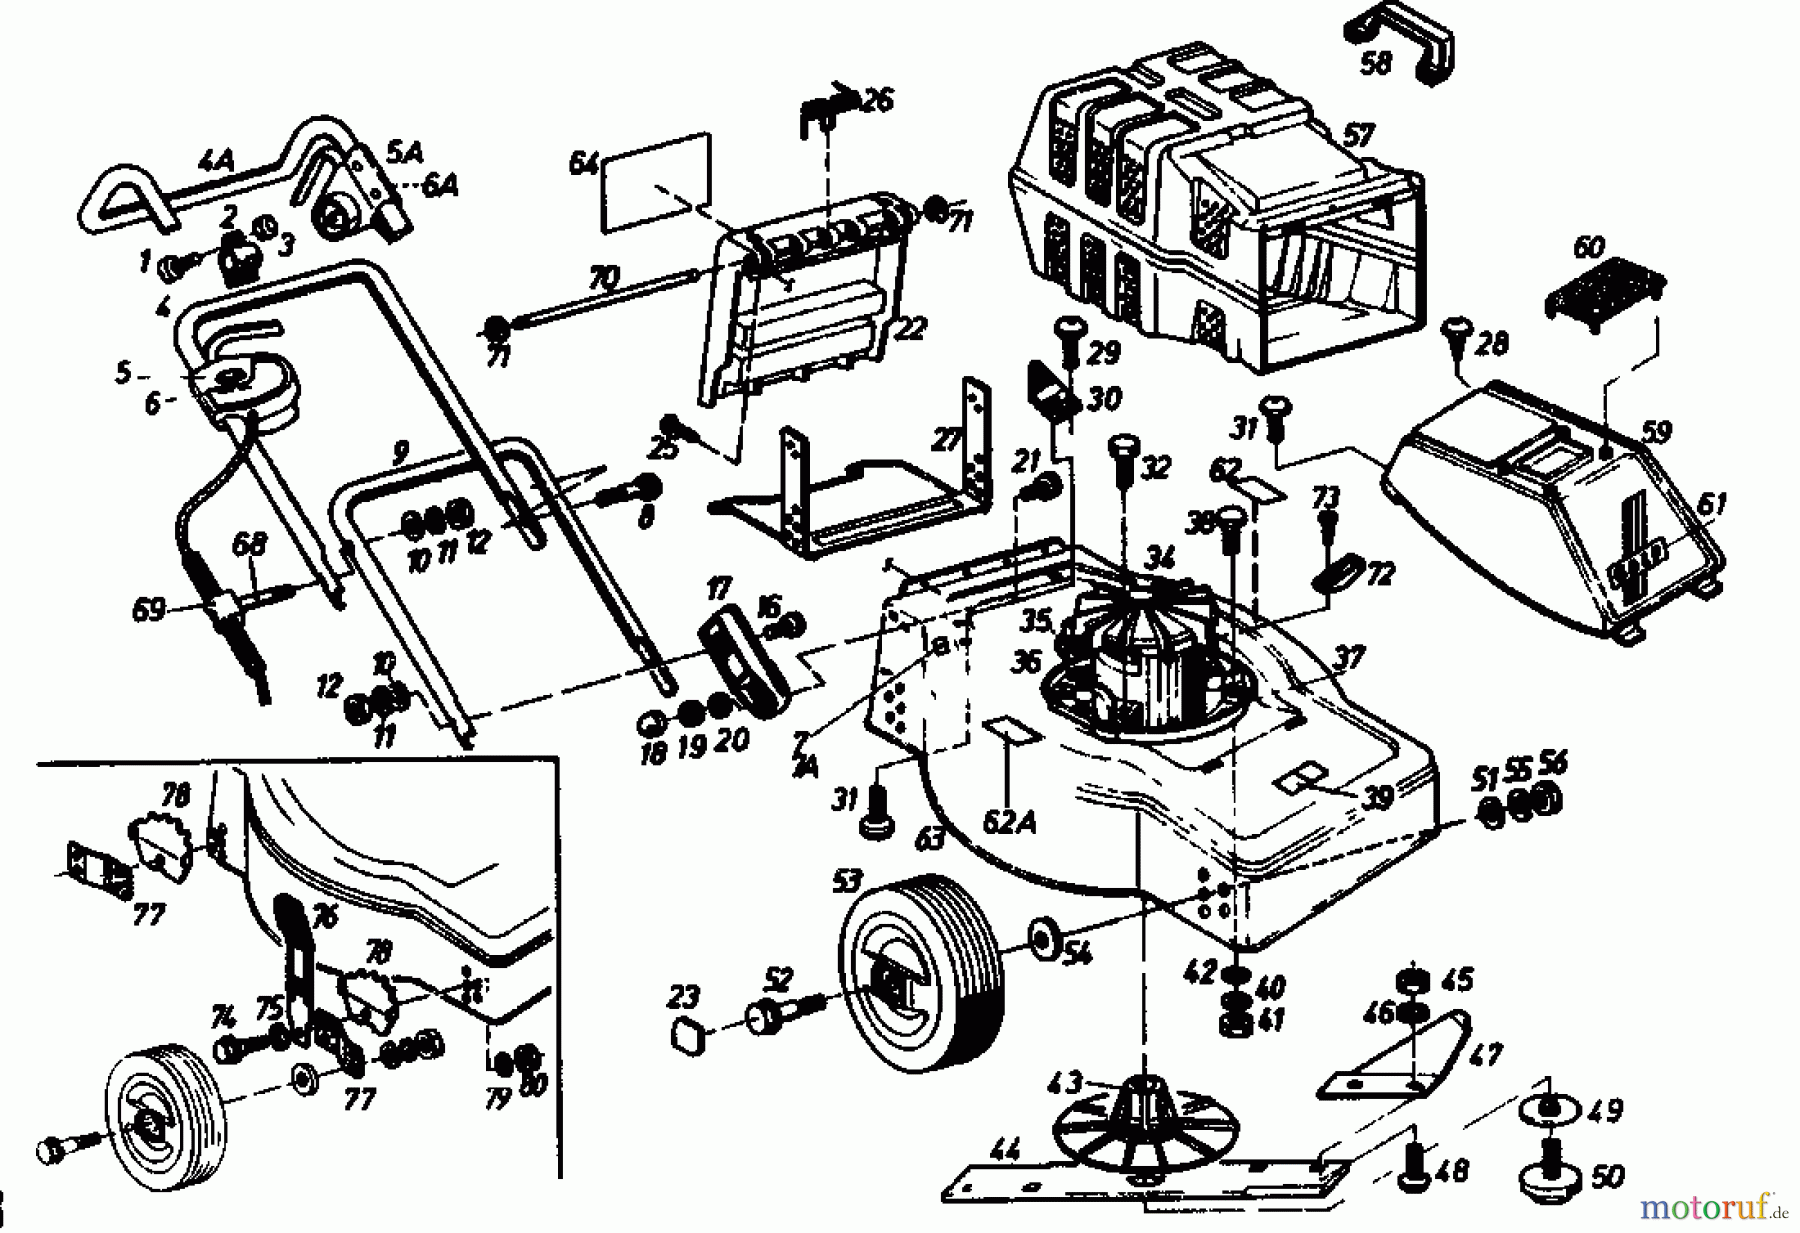  Golf Electric mower Golf E 02881.01  (1988) Basic machine